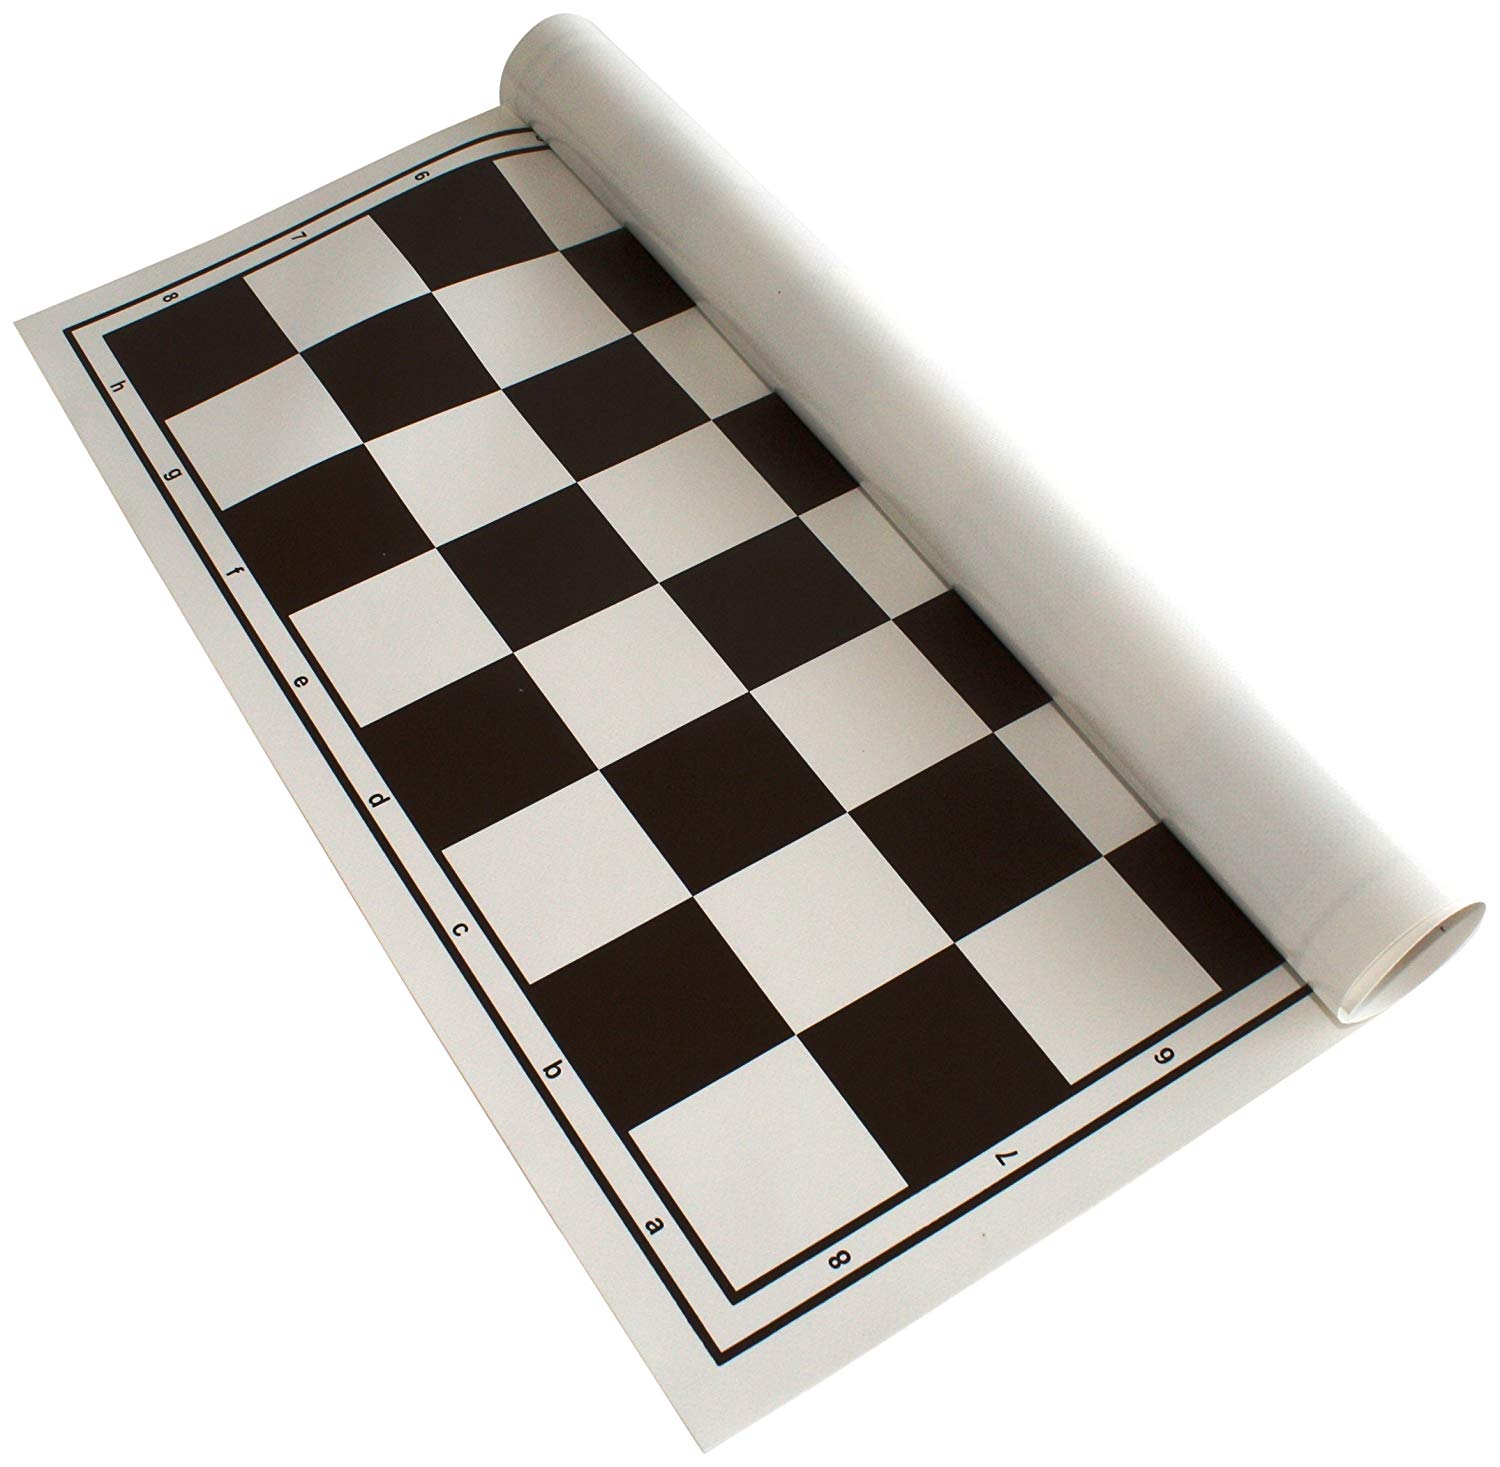 Weible Spiele 02012 Chess Wheeled, 50 X 50 Cm